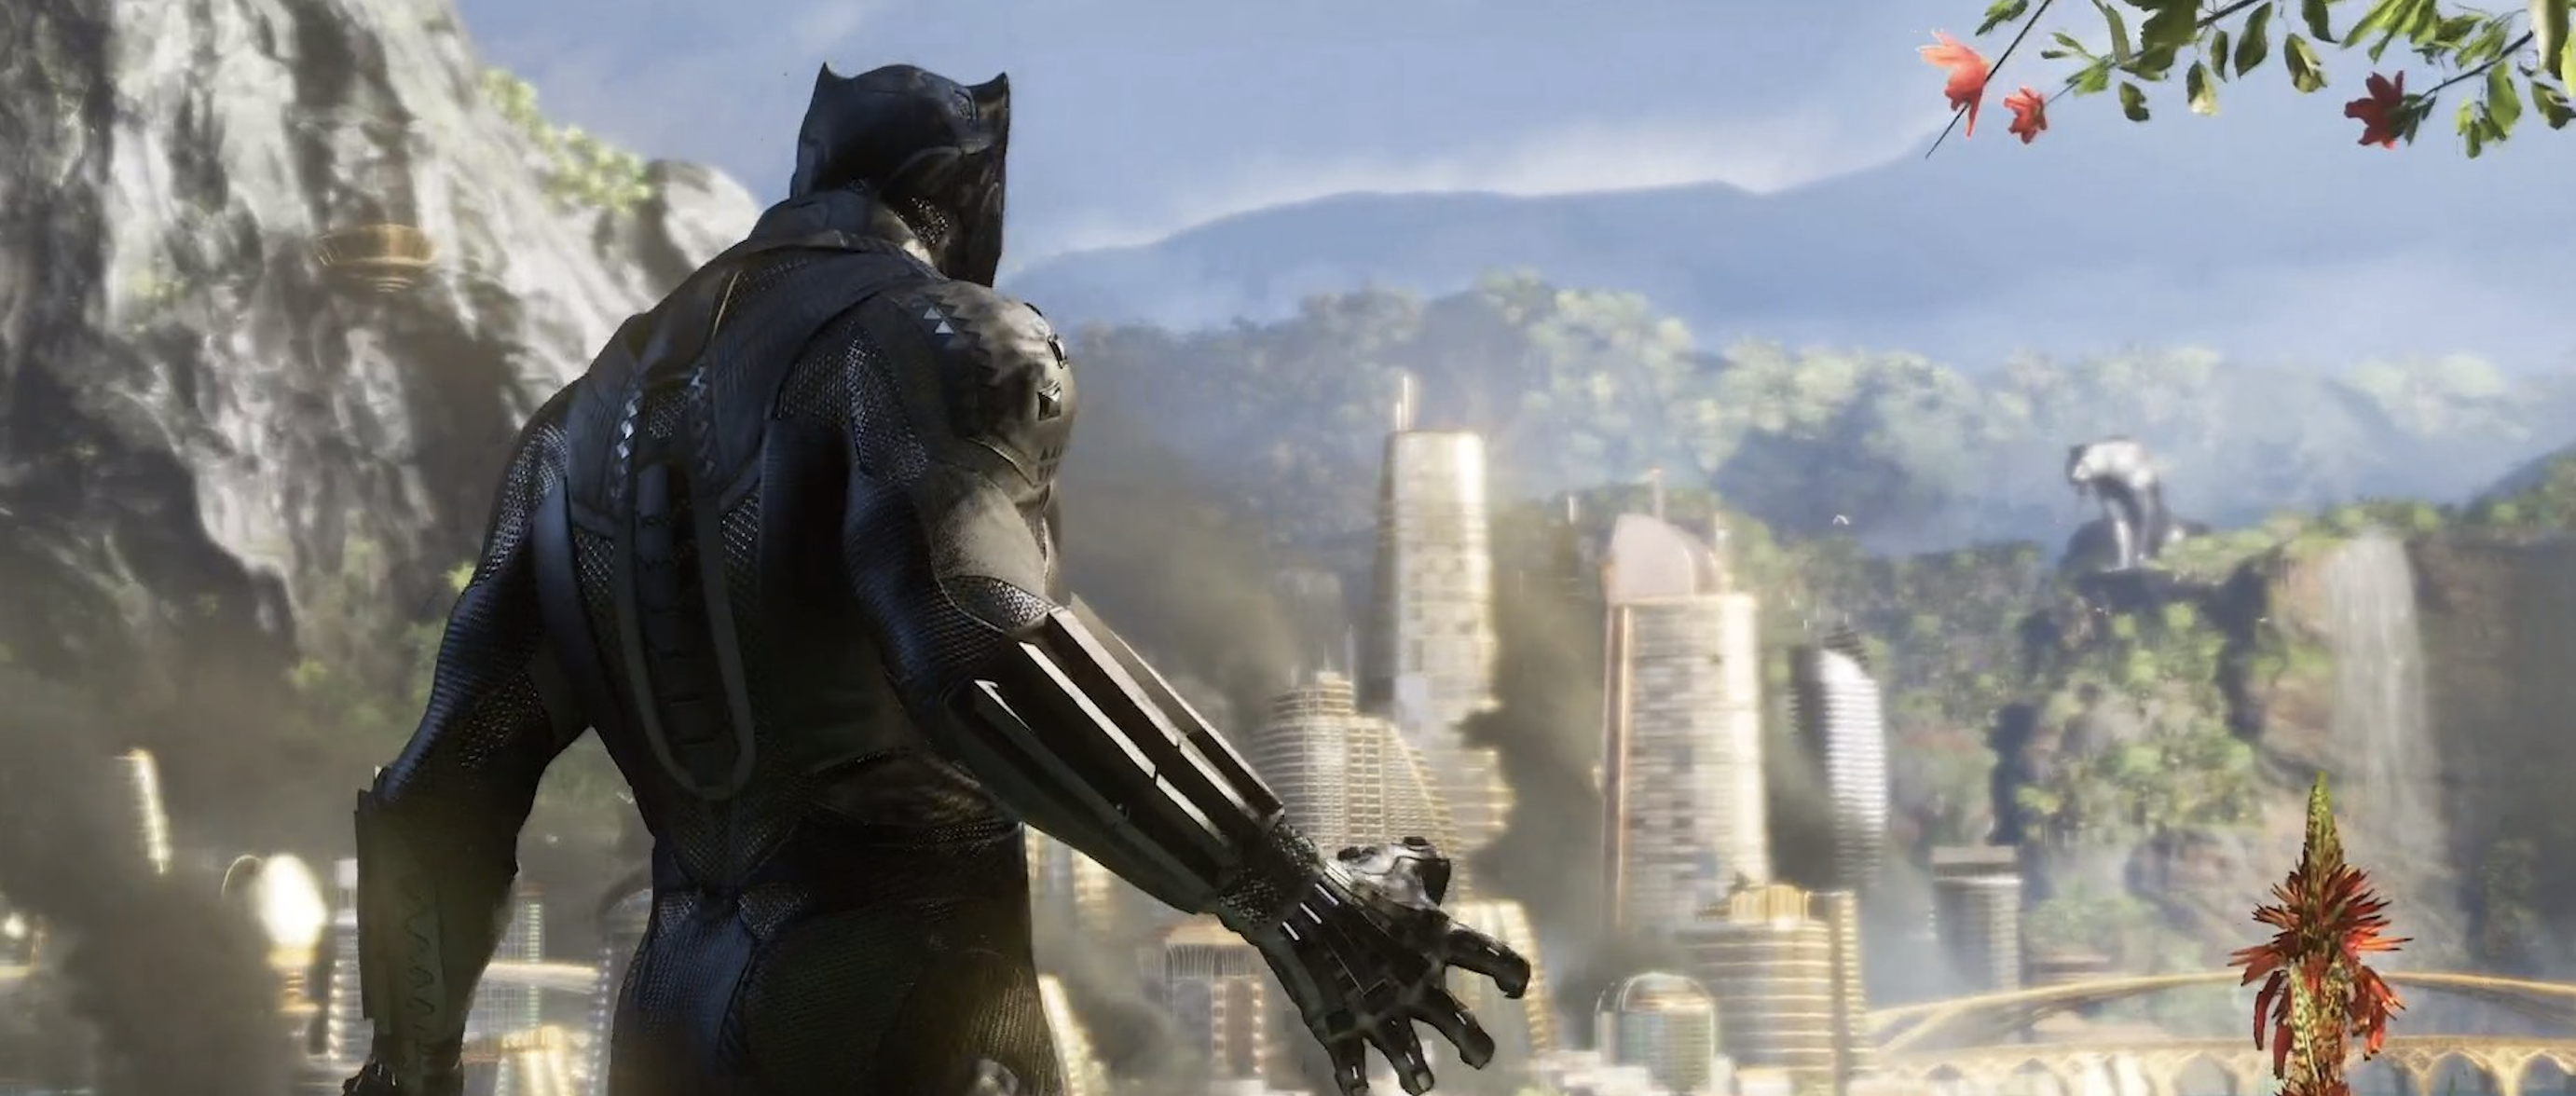 Marvel's Avengers Black Panther: War for Wakanda